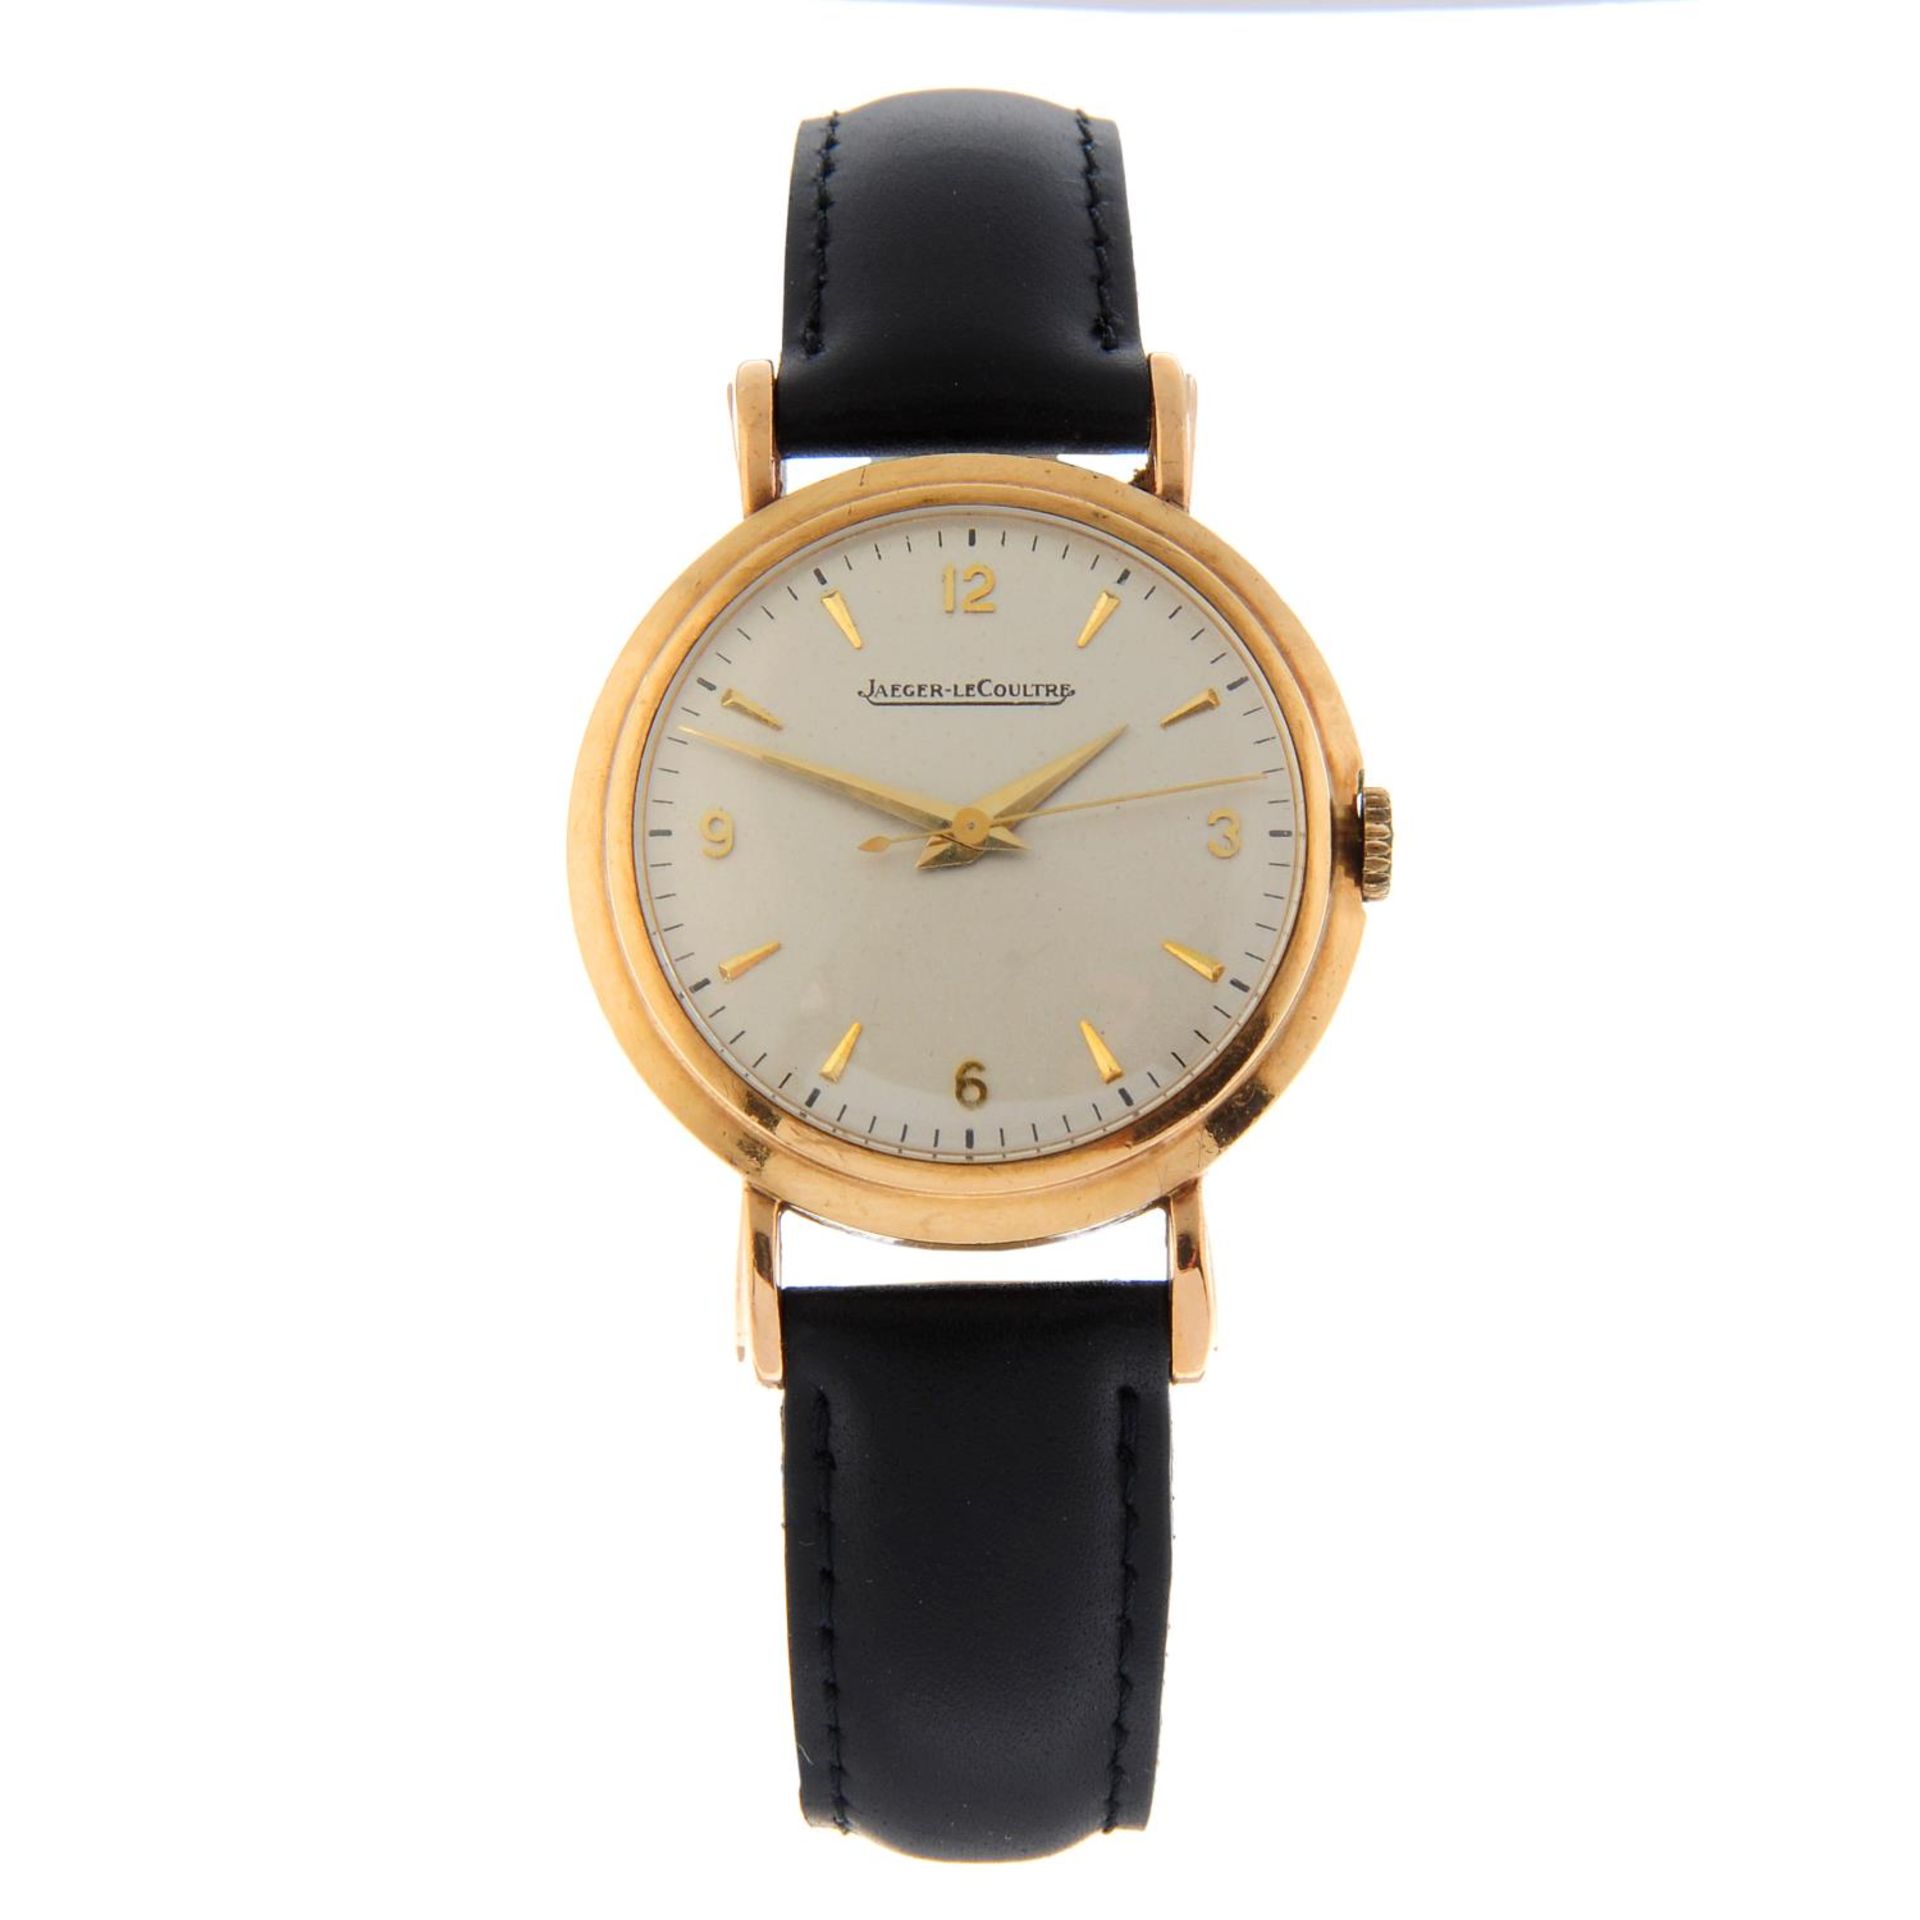 JAEGER-LECOULTRE - a wrist watch.